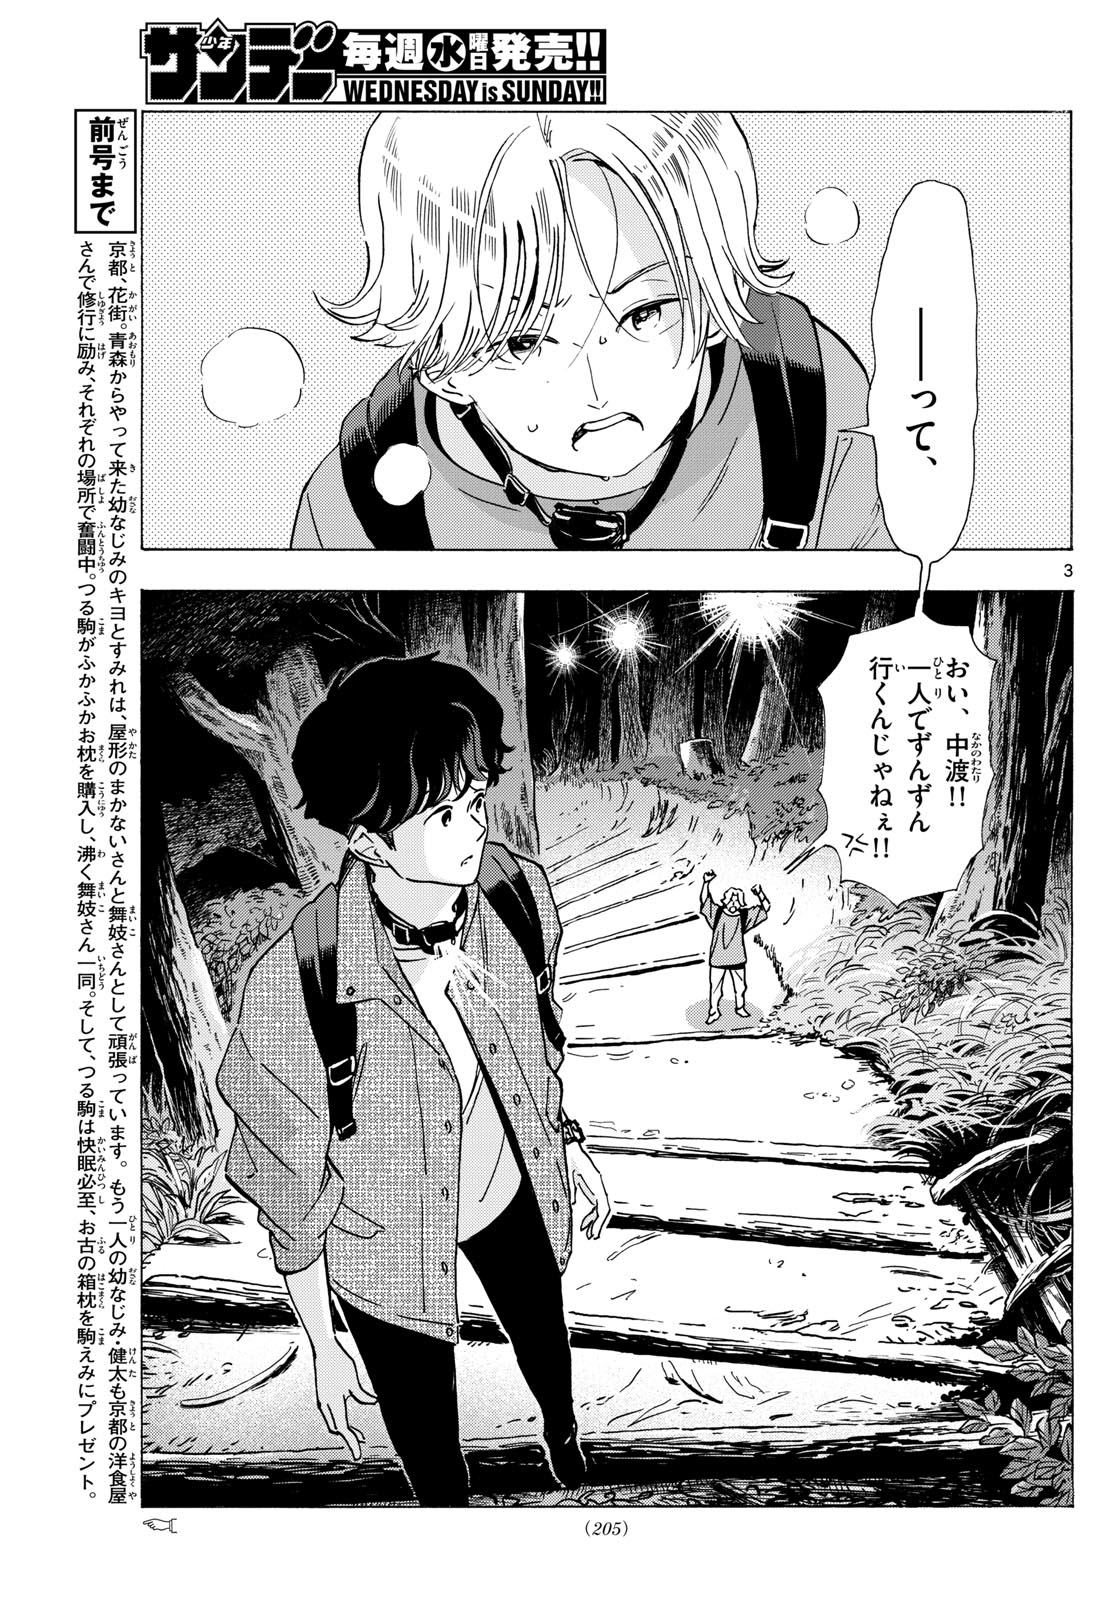 Maiko-san Chi no Makanai-san - Chapter 295 - Page 3